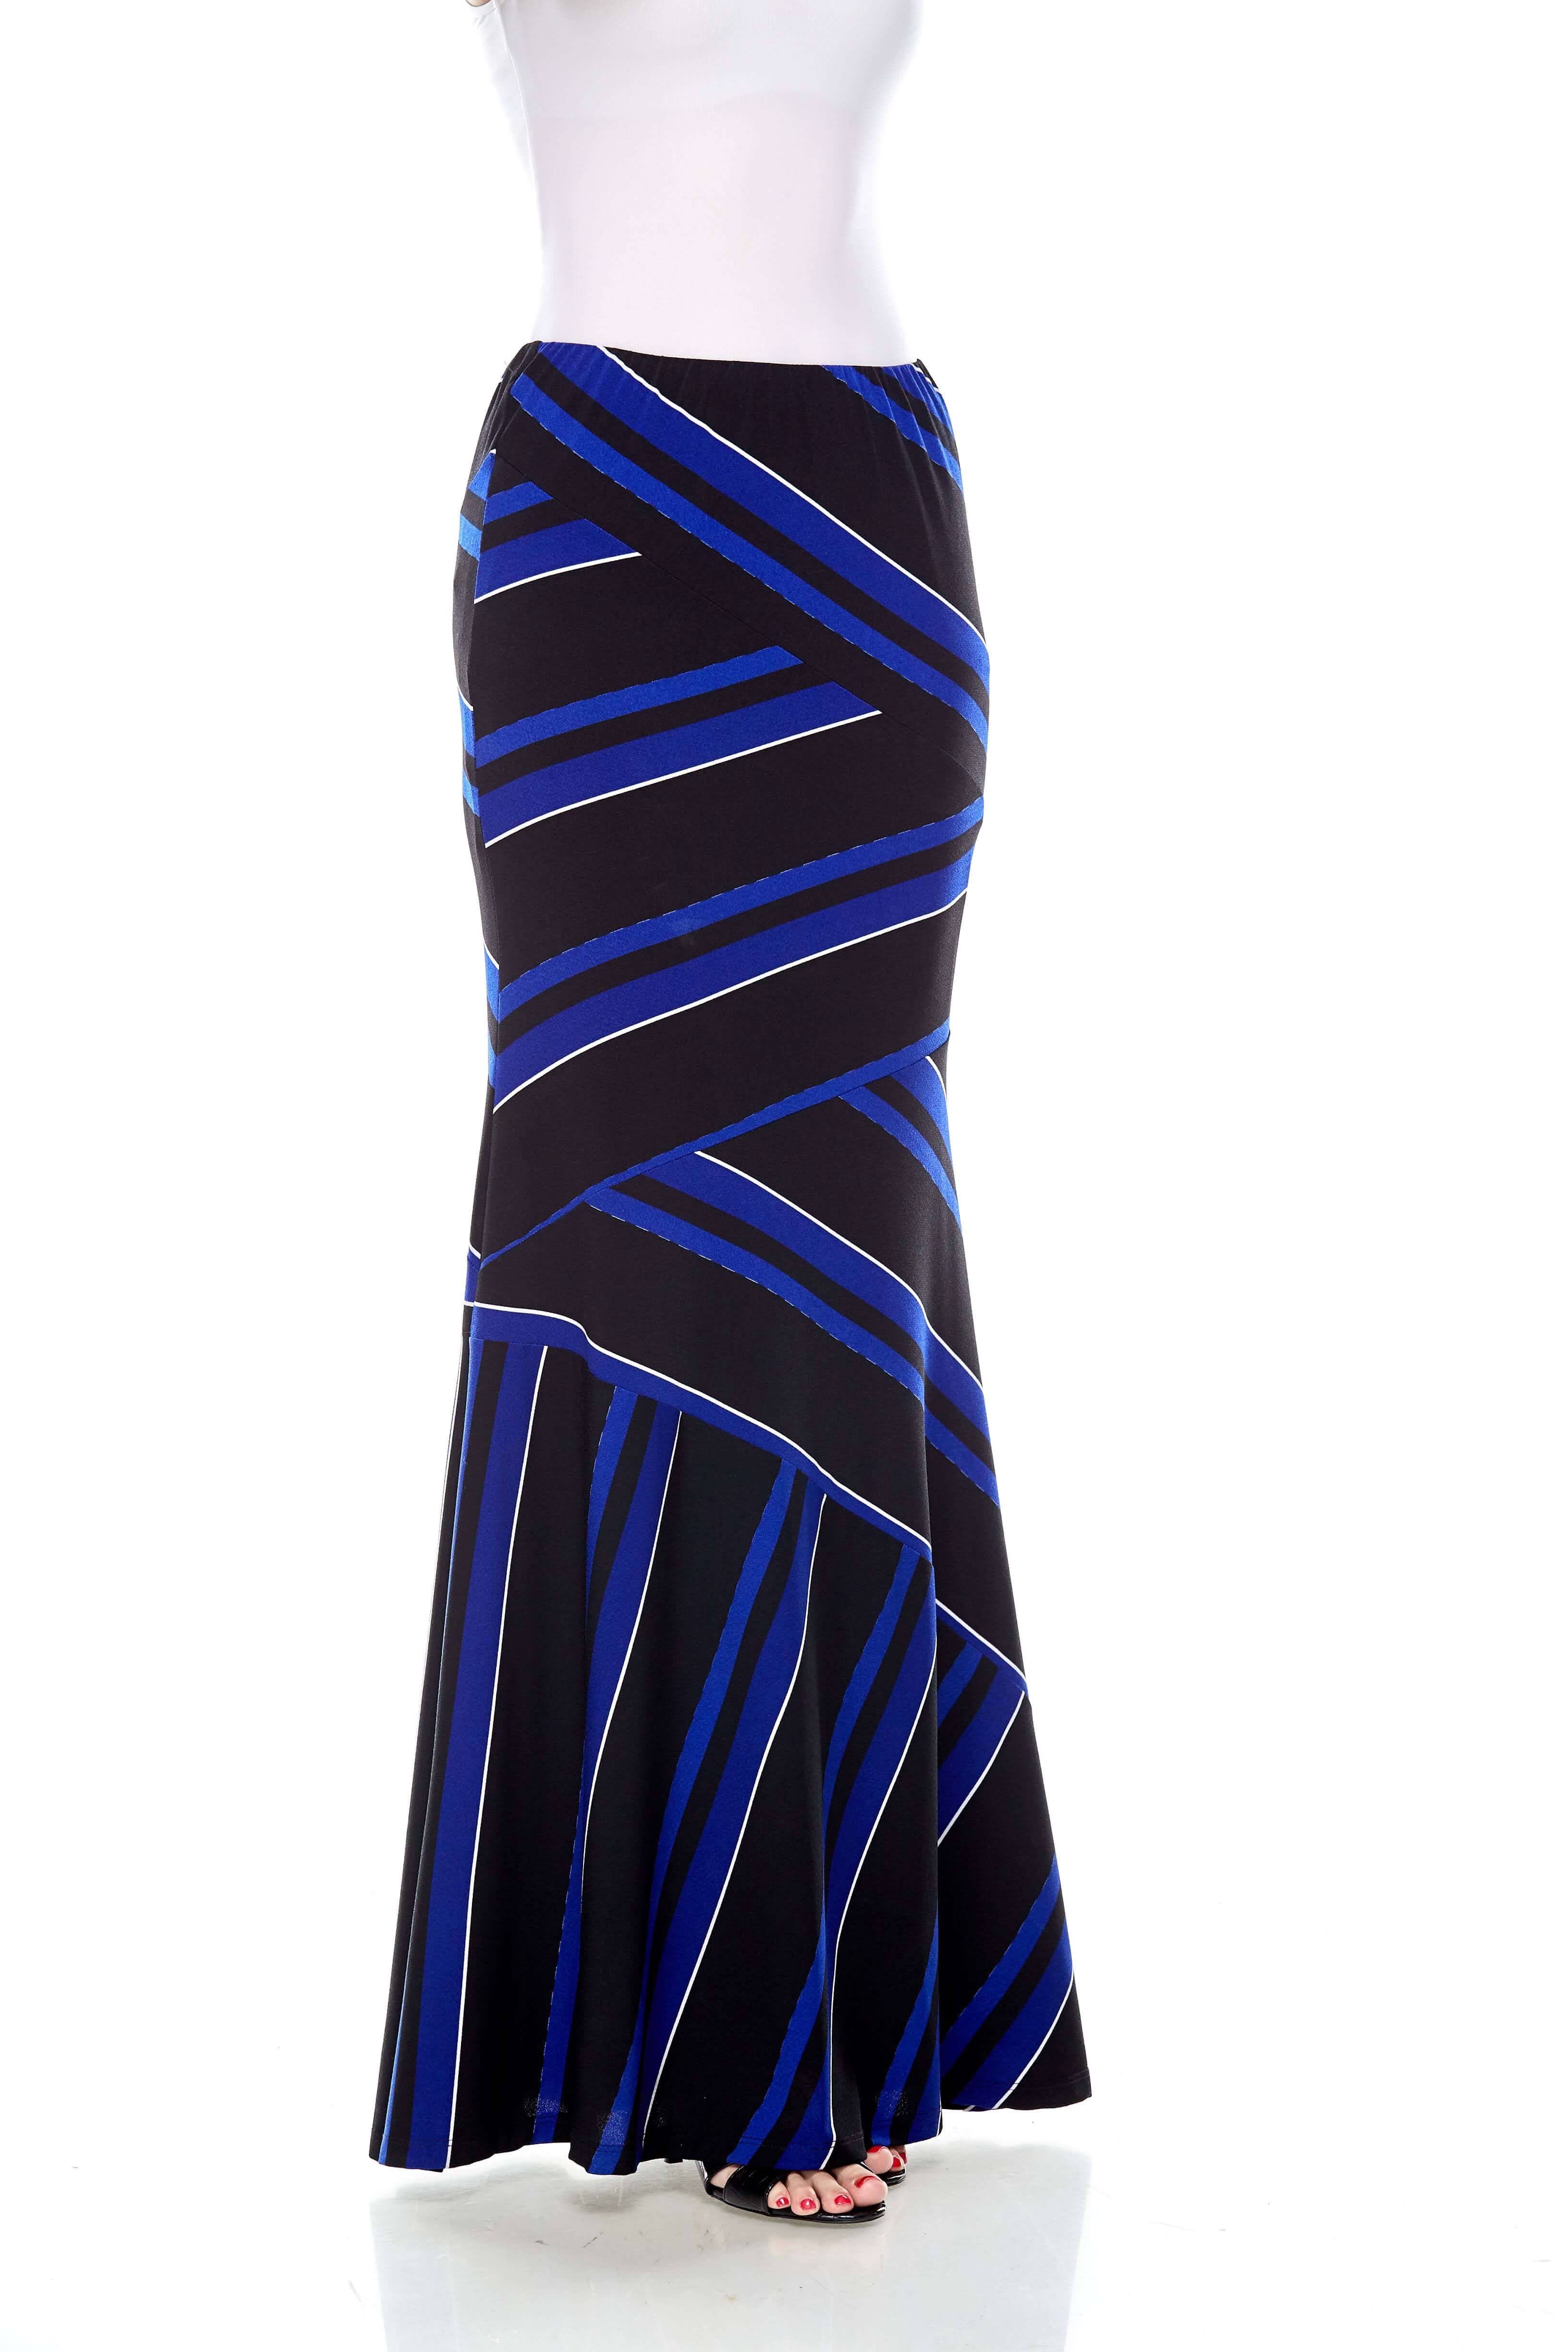 Blue-Black Striped Mermaid Skirt (8)